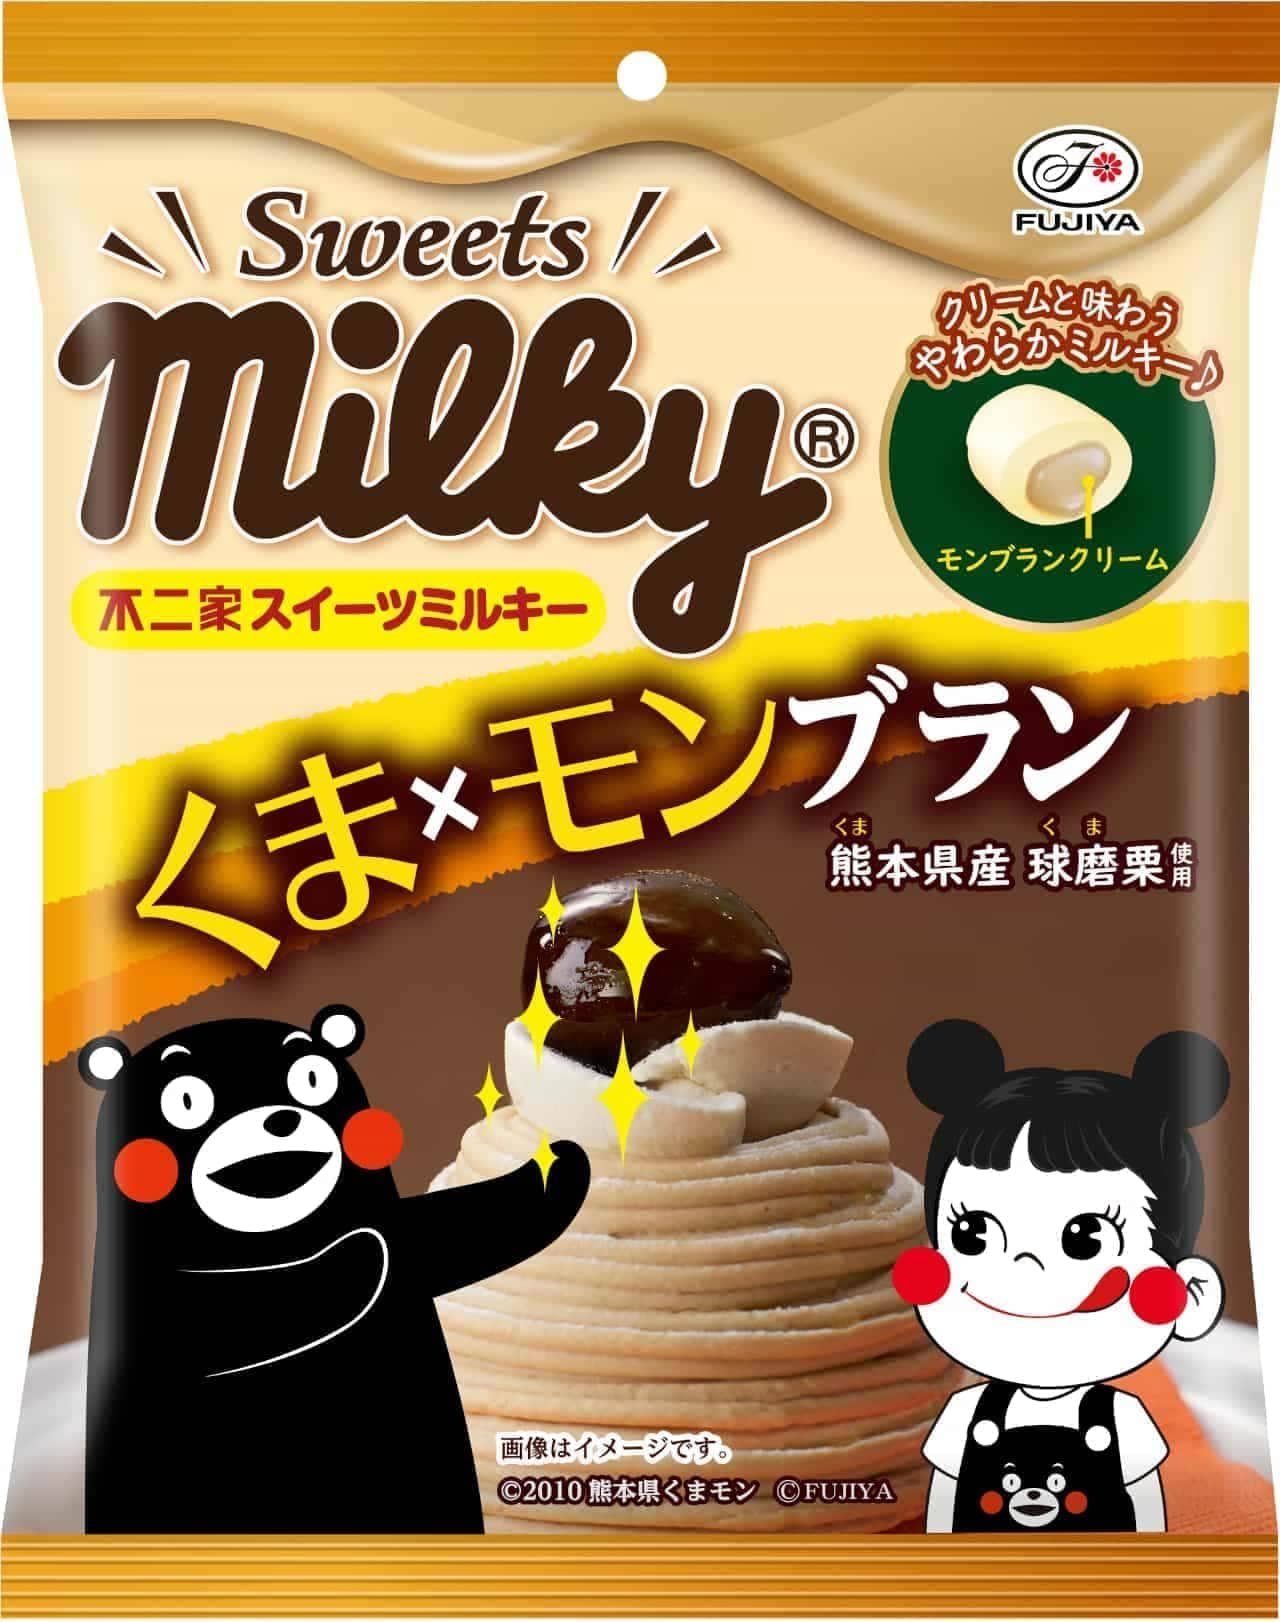 Fujiya "Country Ma'am (Yaki Maron)" "Look (Sweet Potato & Daigakuimo)" "Kuma x Montblanc Milky Bag"